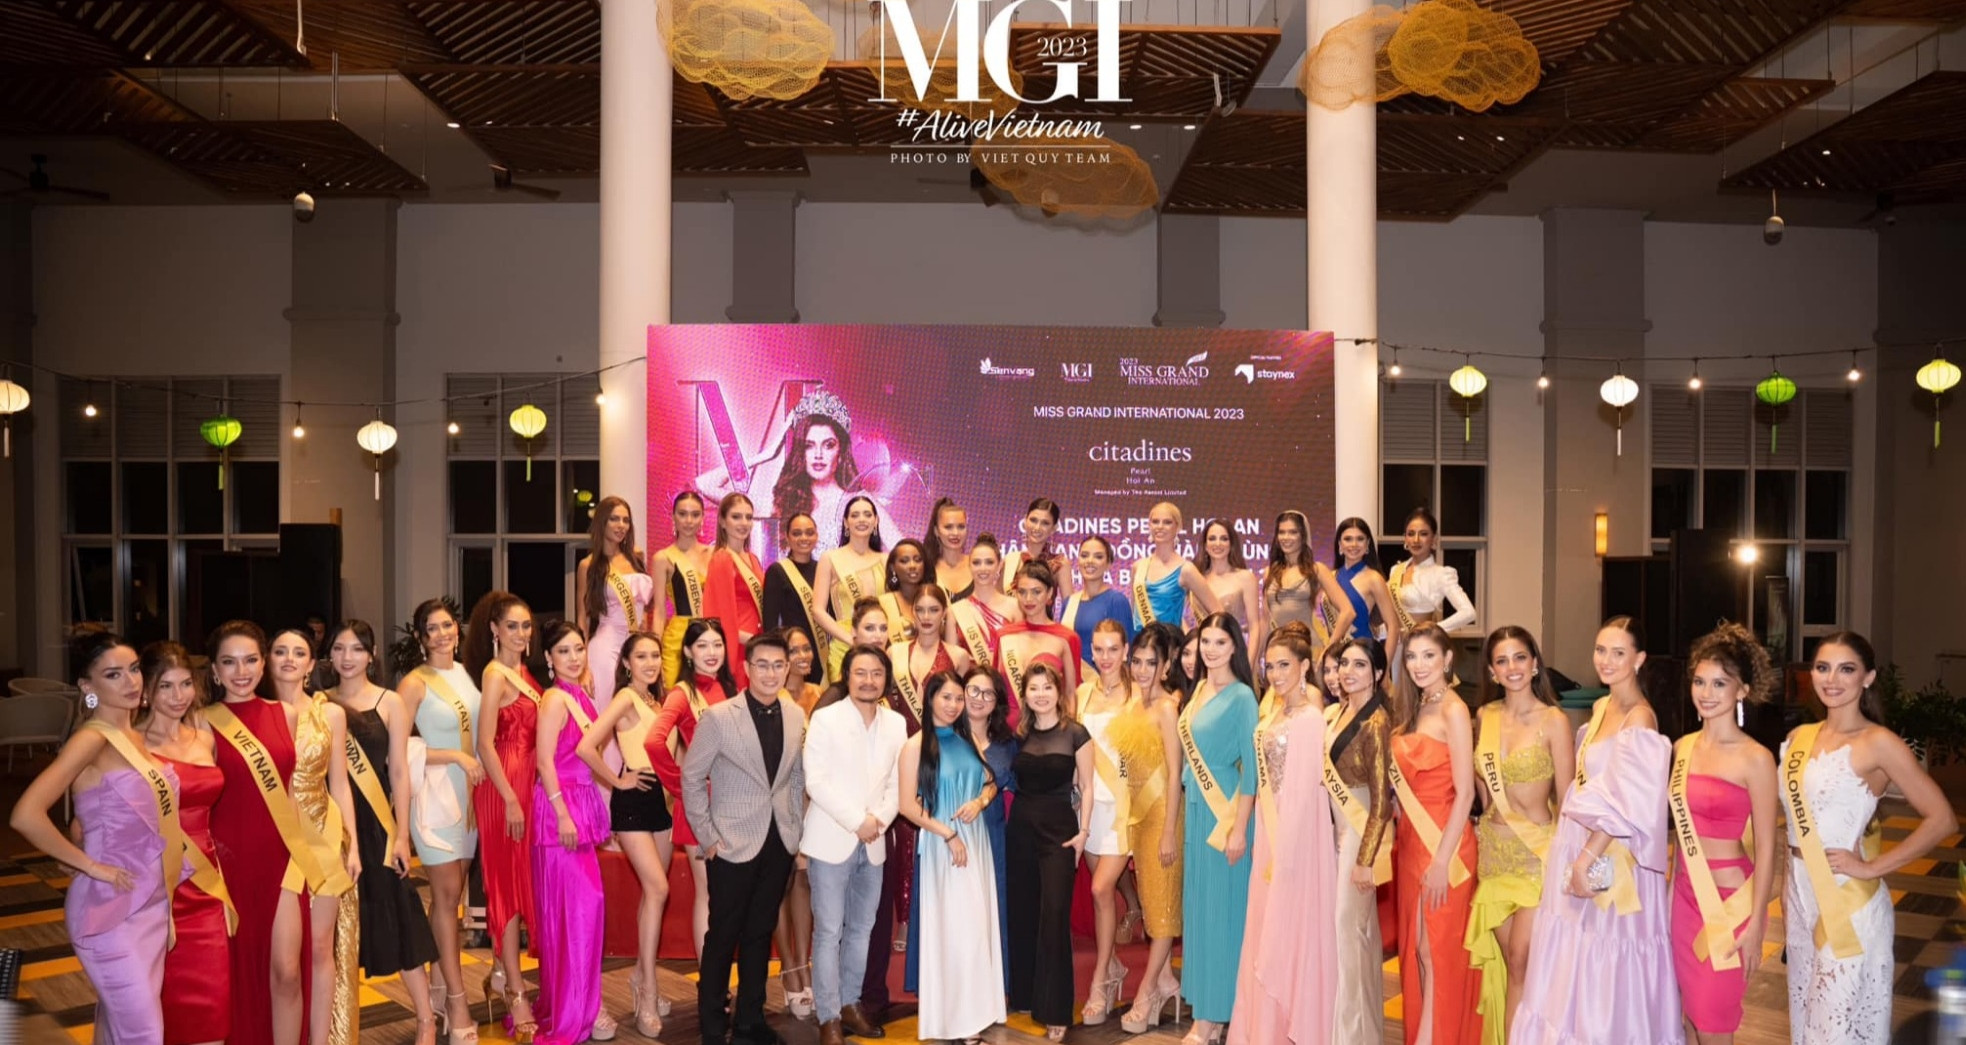  Các thí sinh Miss Grand International 2023 tại Citadines Pearl Hoi An